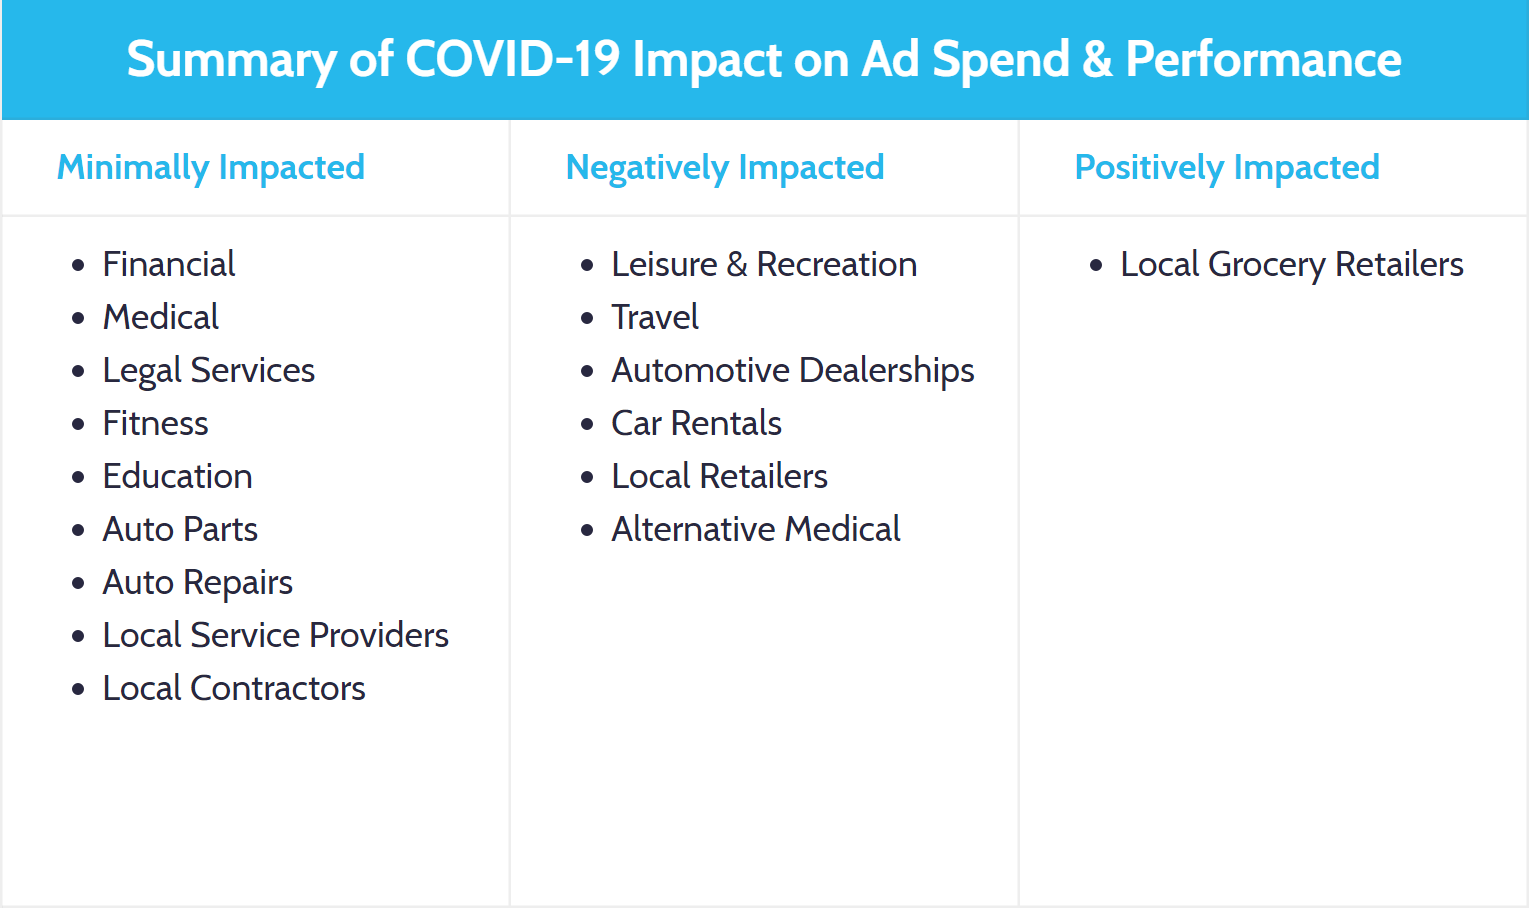 COVID-19 impact on ad spending